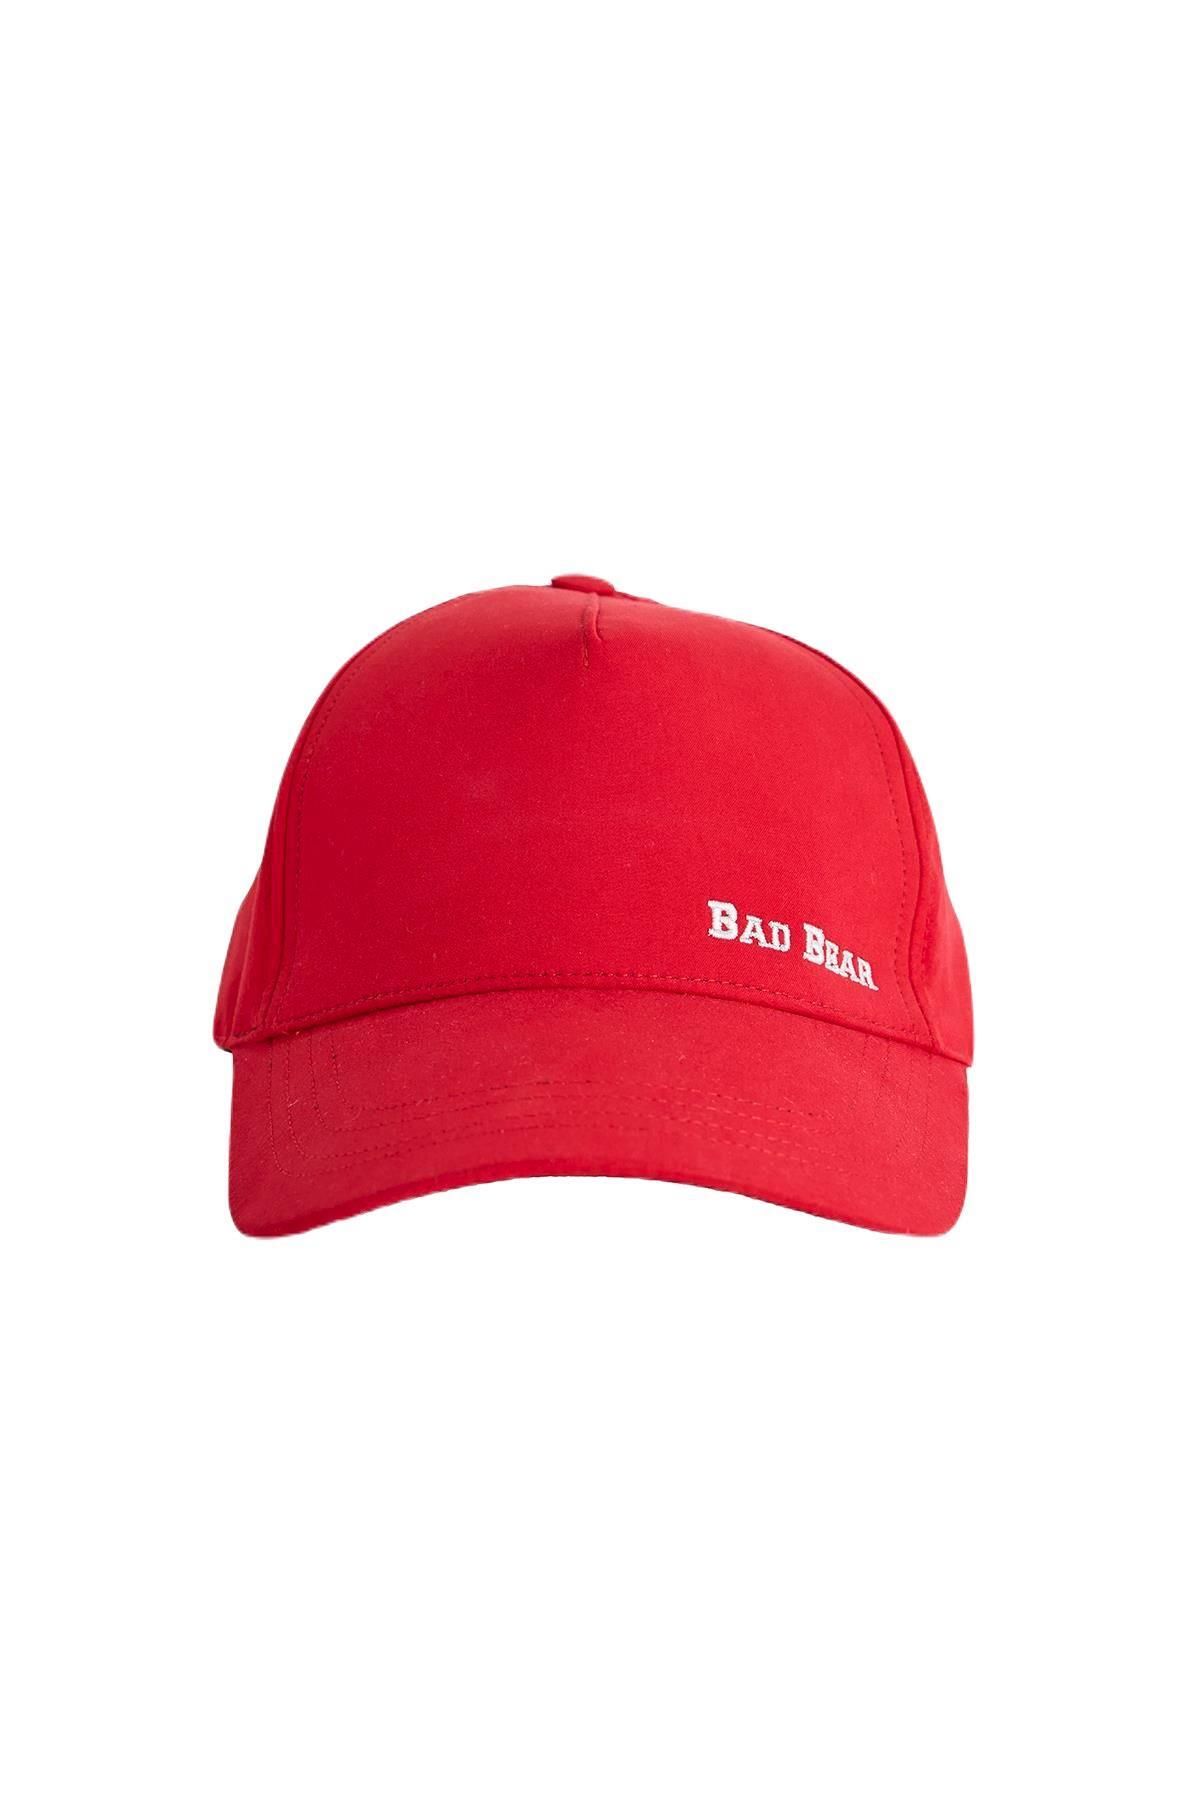 Bad Bear 23.01.42.002-c54 Bear Boy Erkek Şapka